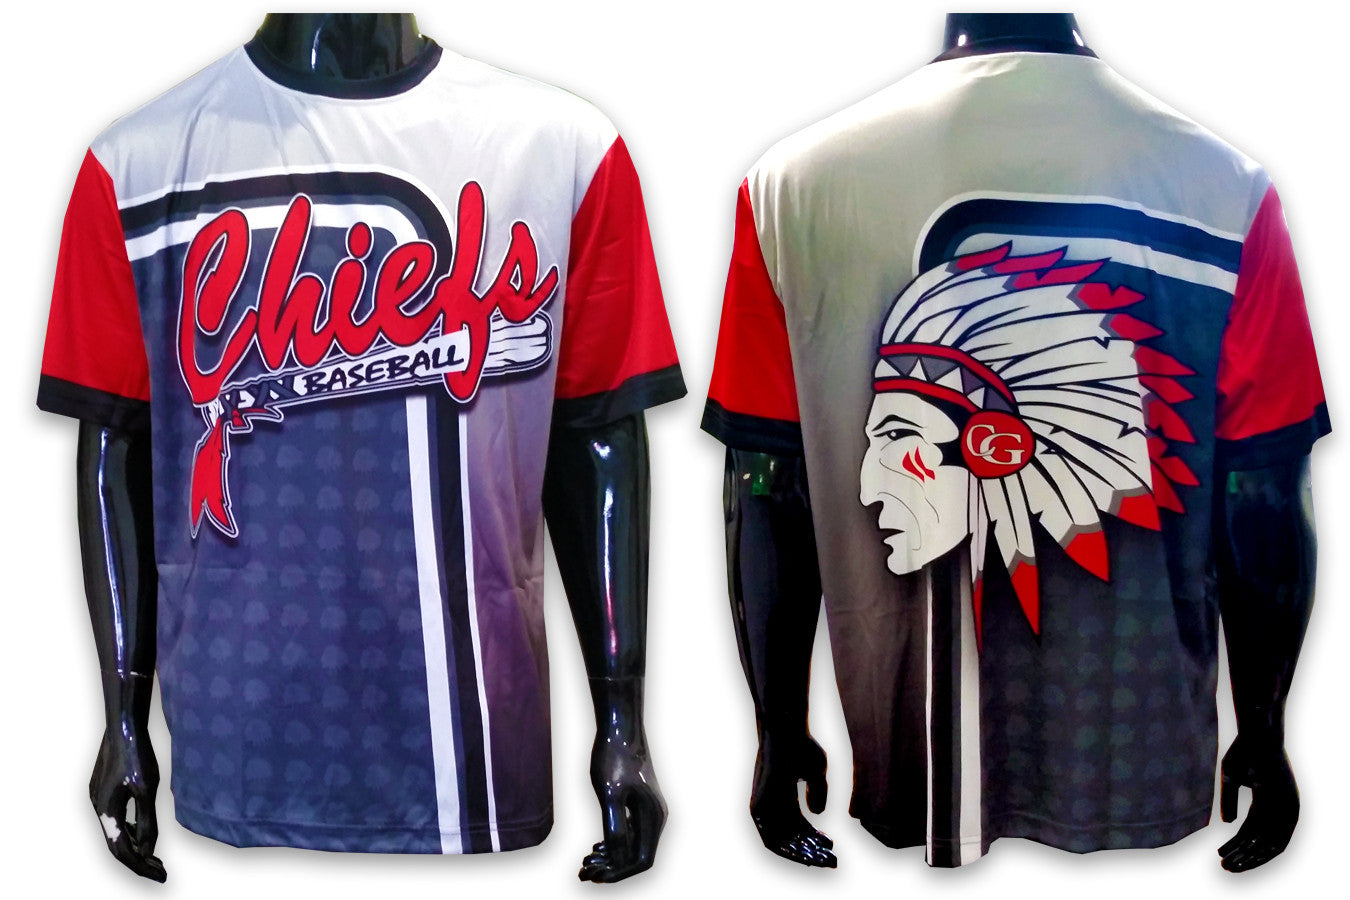 chiefs baseball jersey